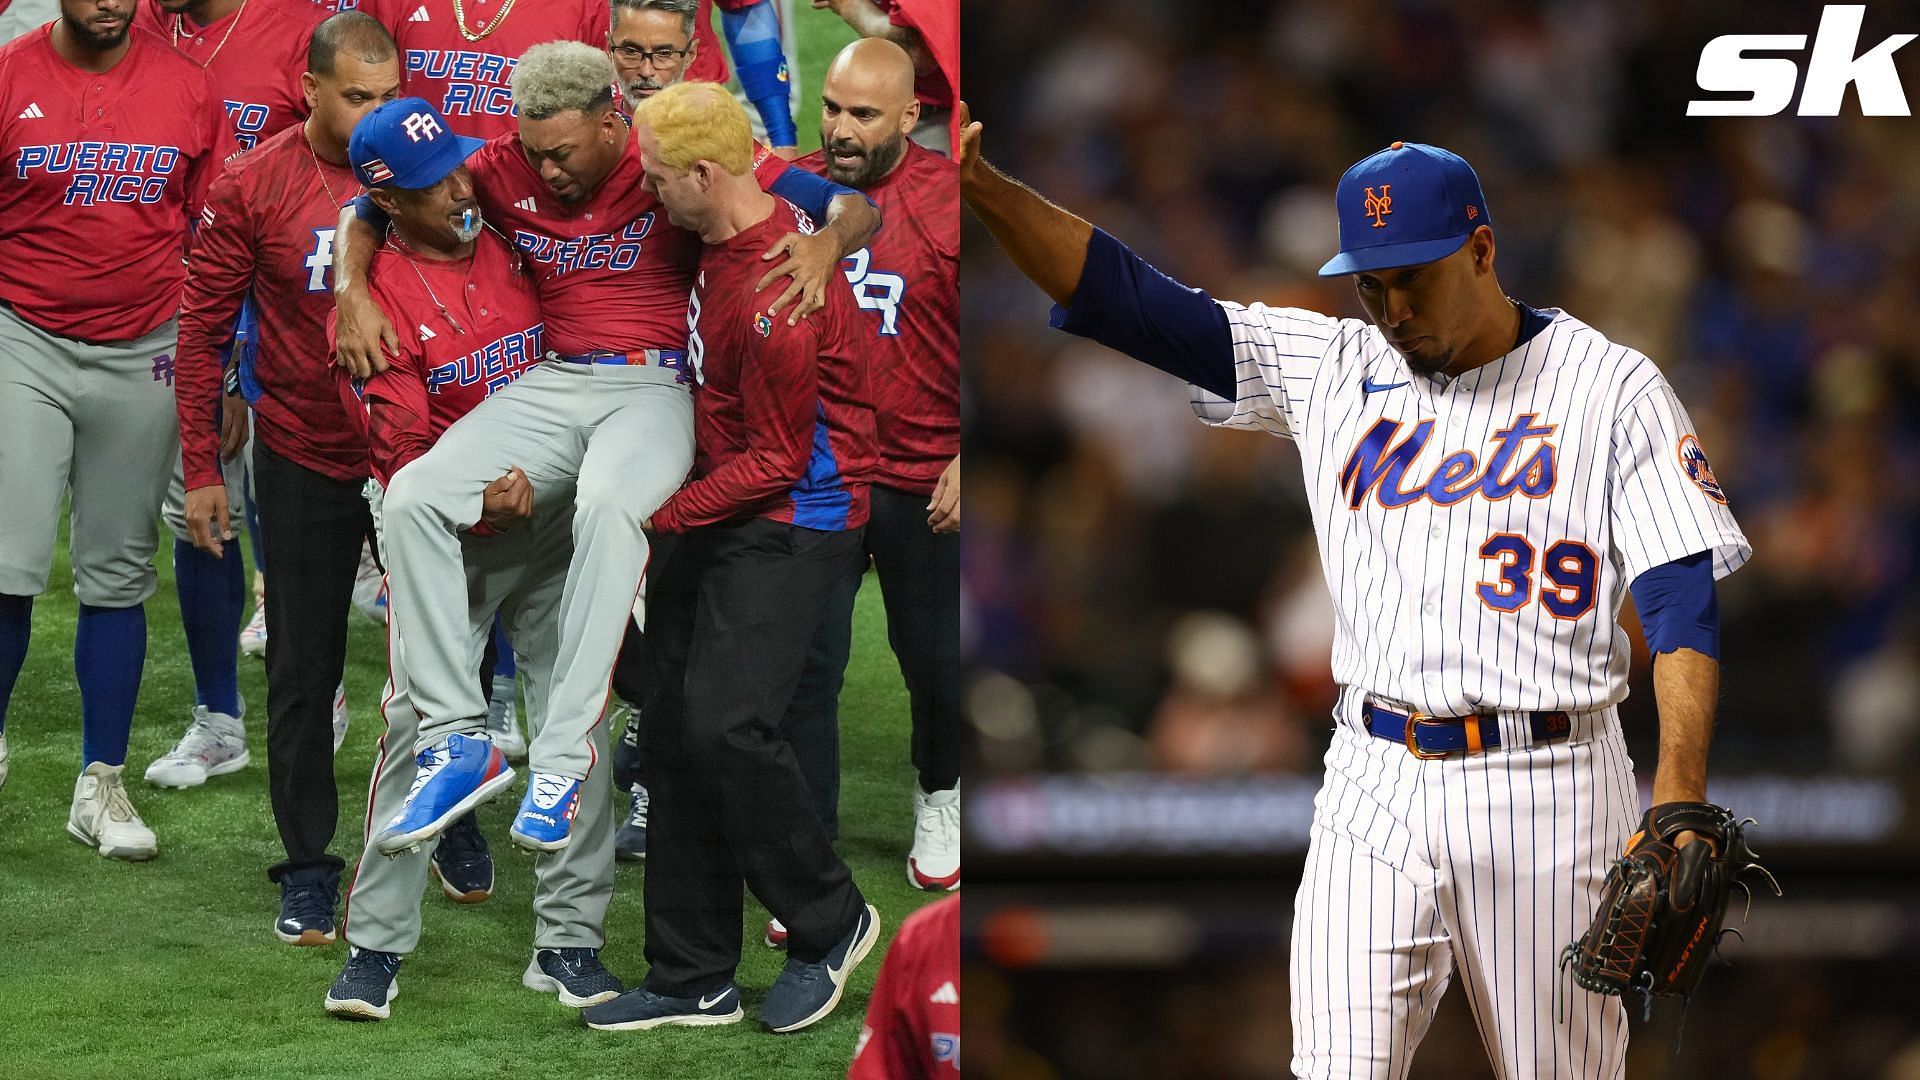 NY Mets' star pitcher Edwin Diaz injured celebrating World